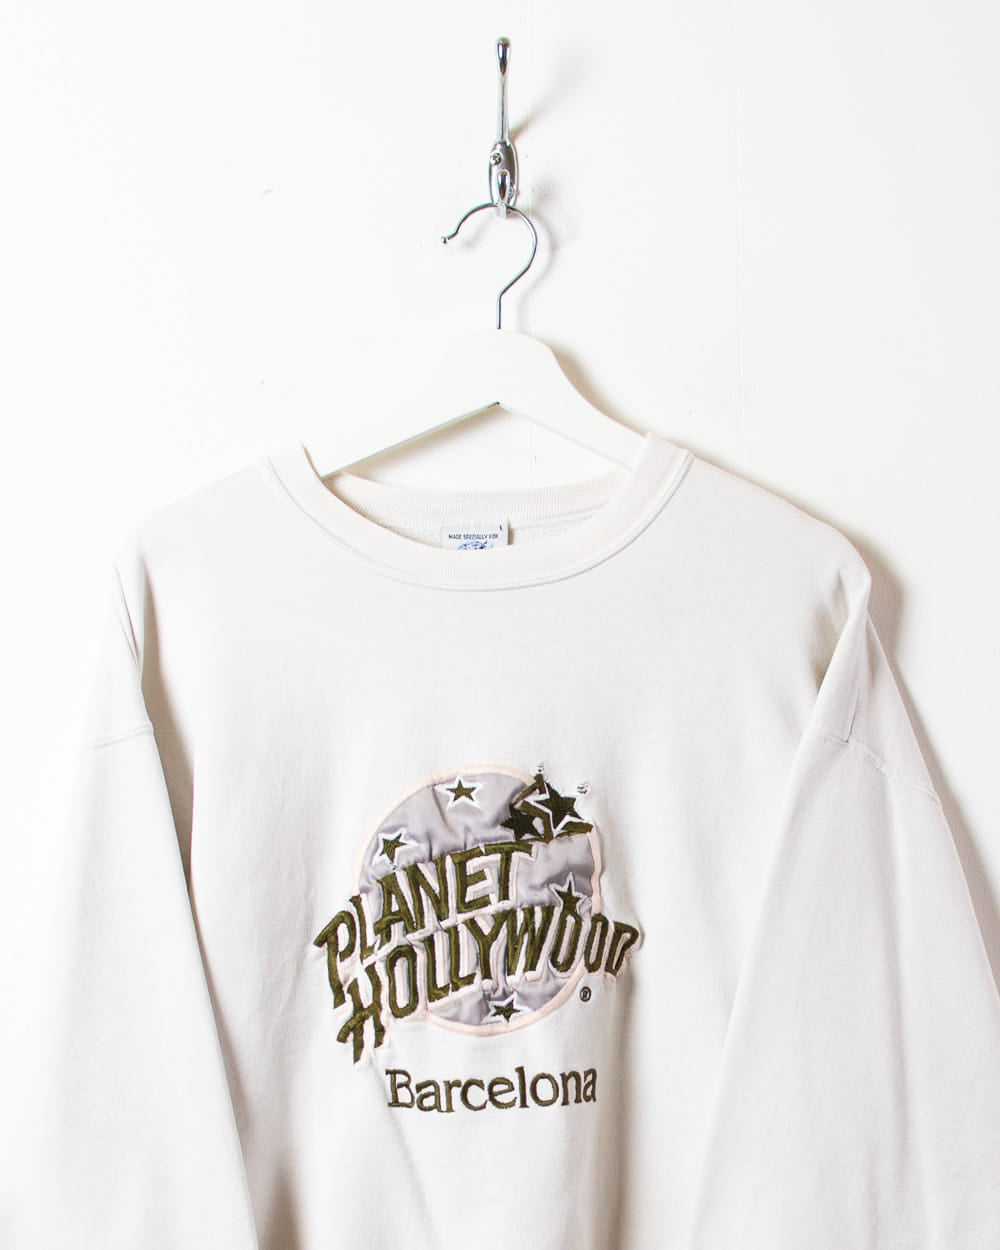 Stone Planet Hollywood Barcelona Worn Sweatshirt - X-Small